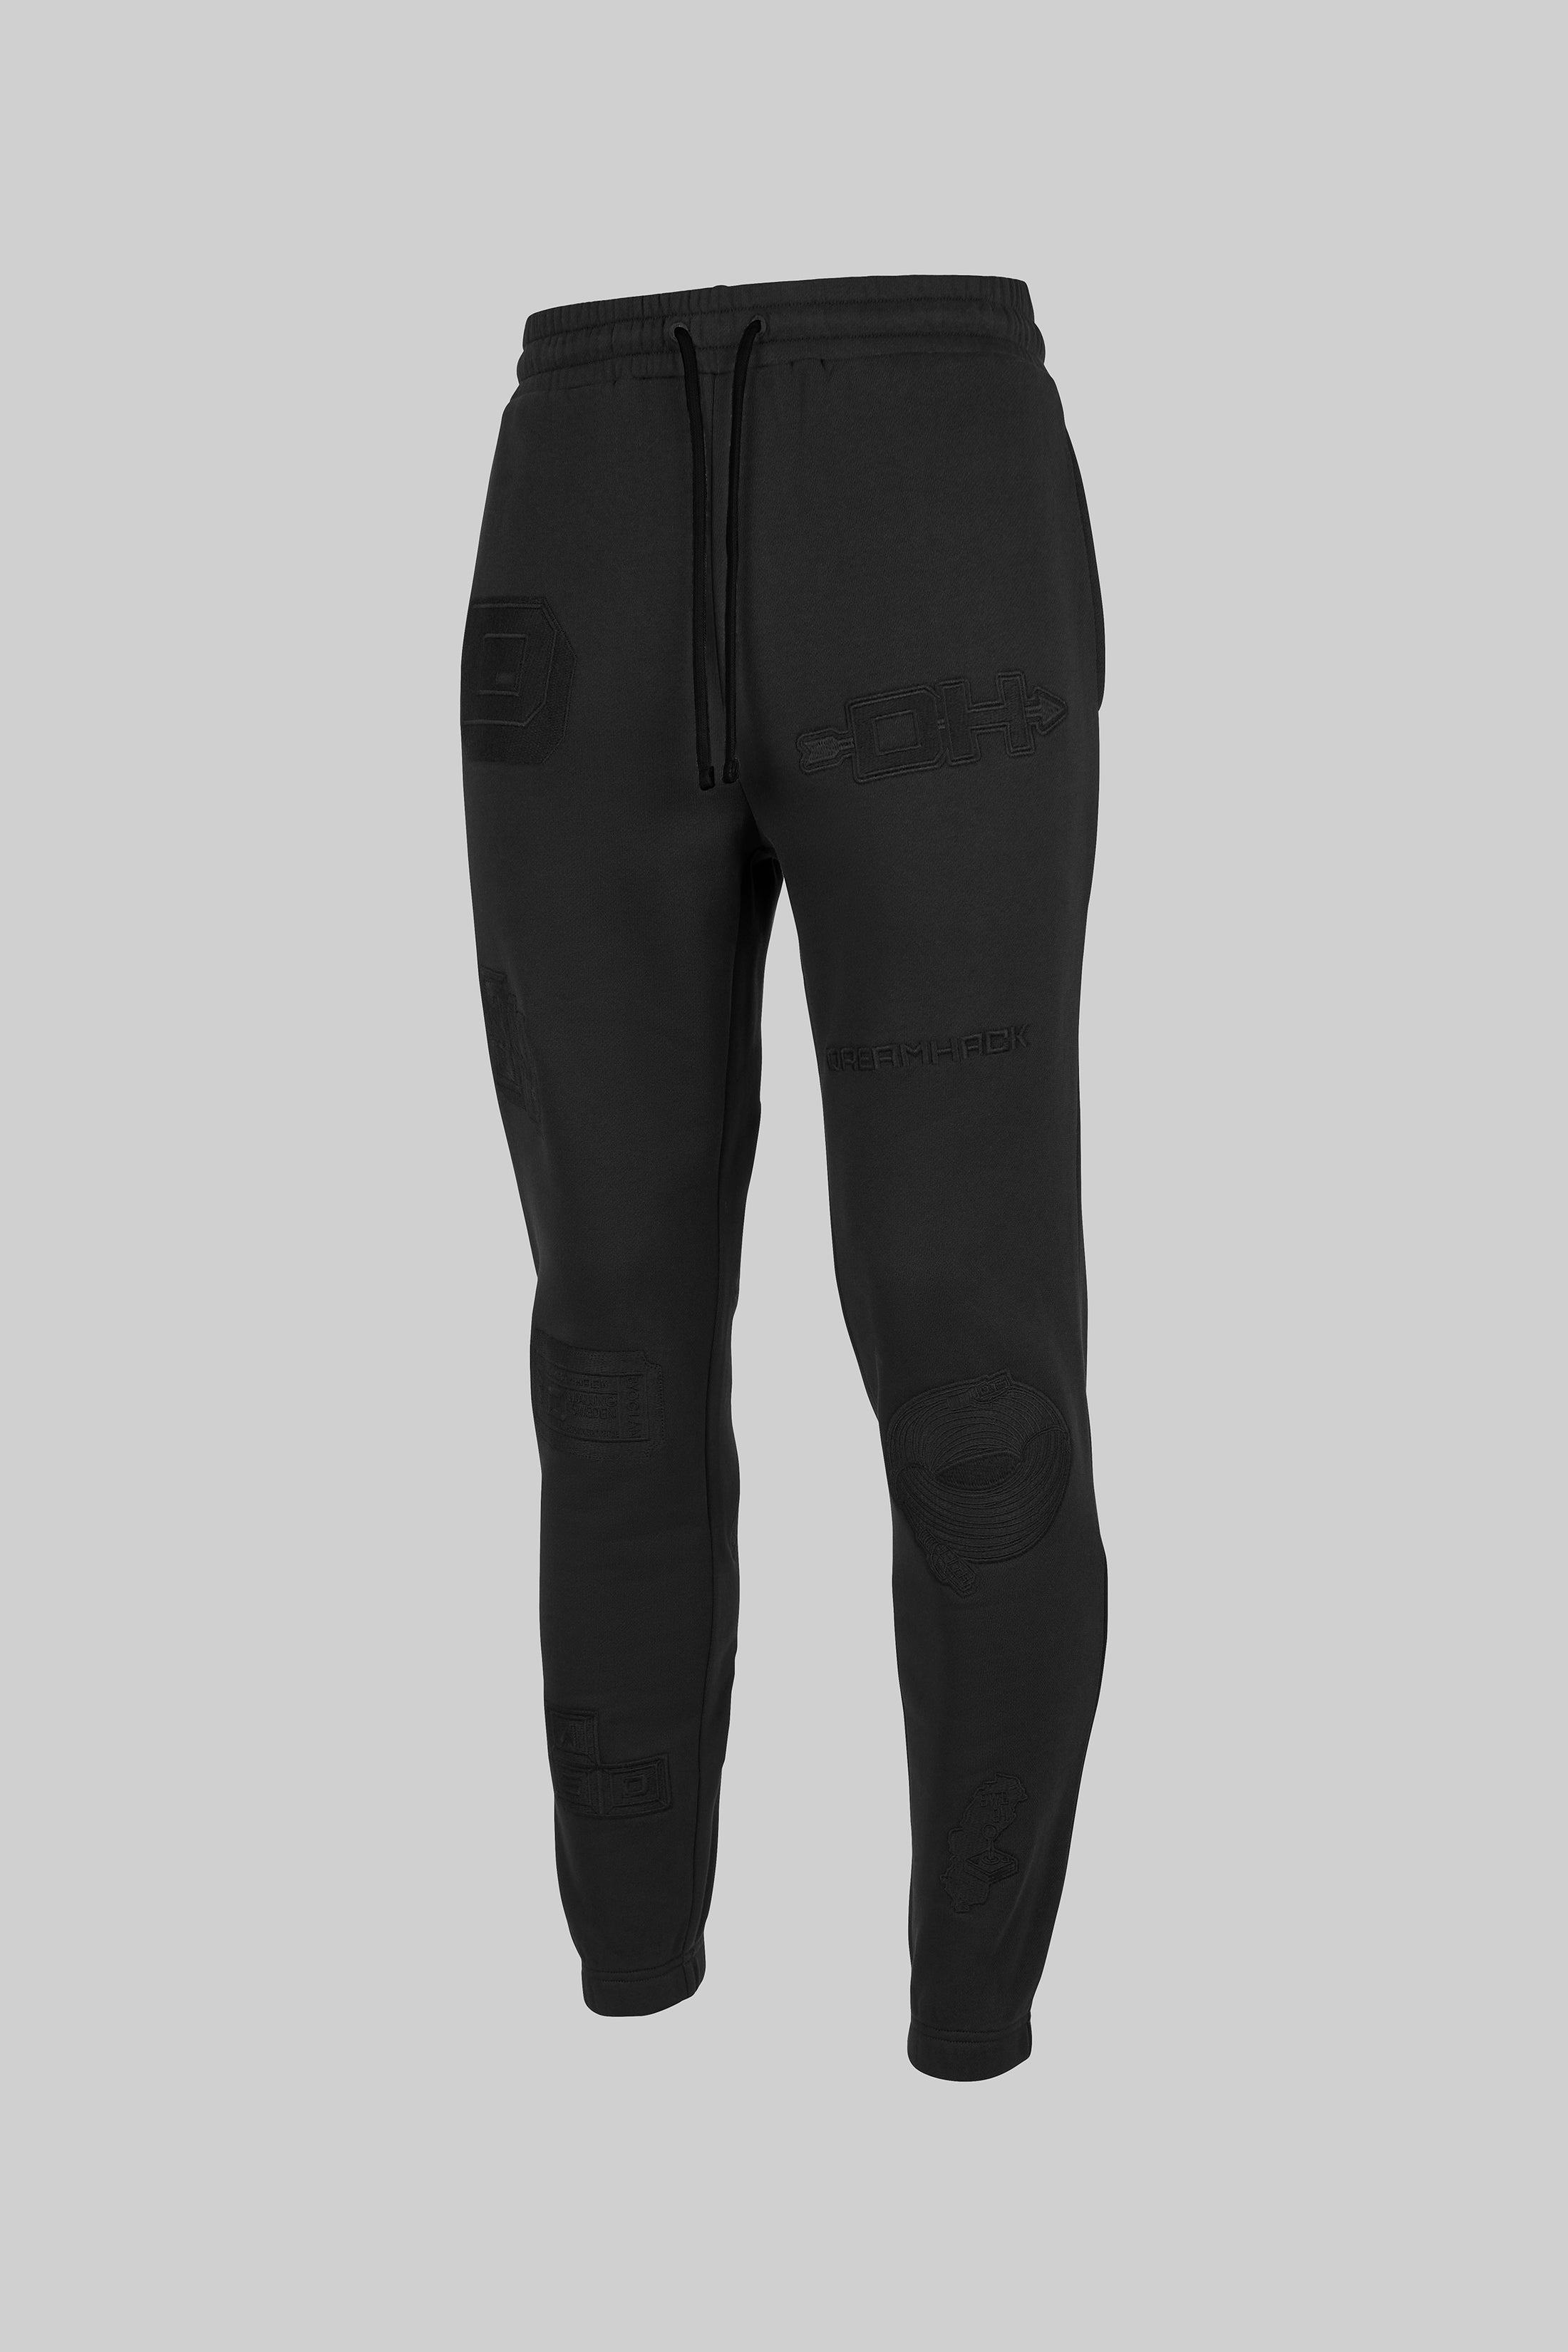 Nike Women Jogger Sweatpants Embroidered Grey Black White Logo Size Small